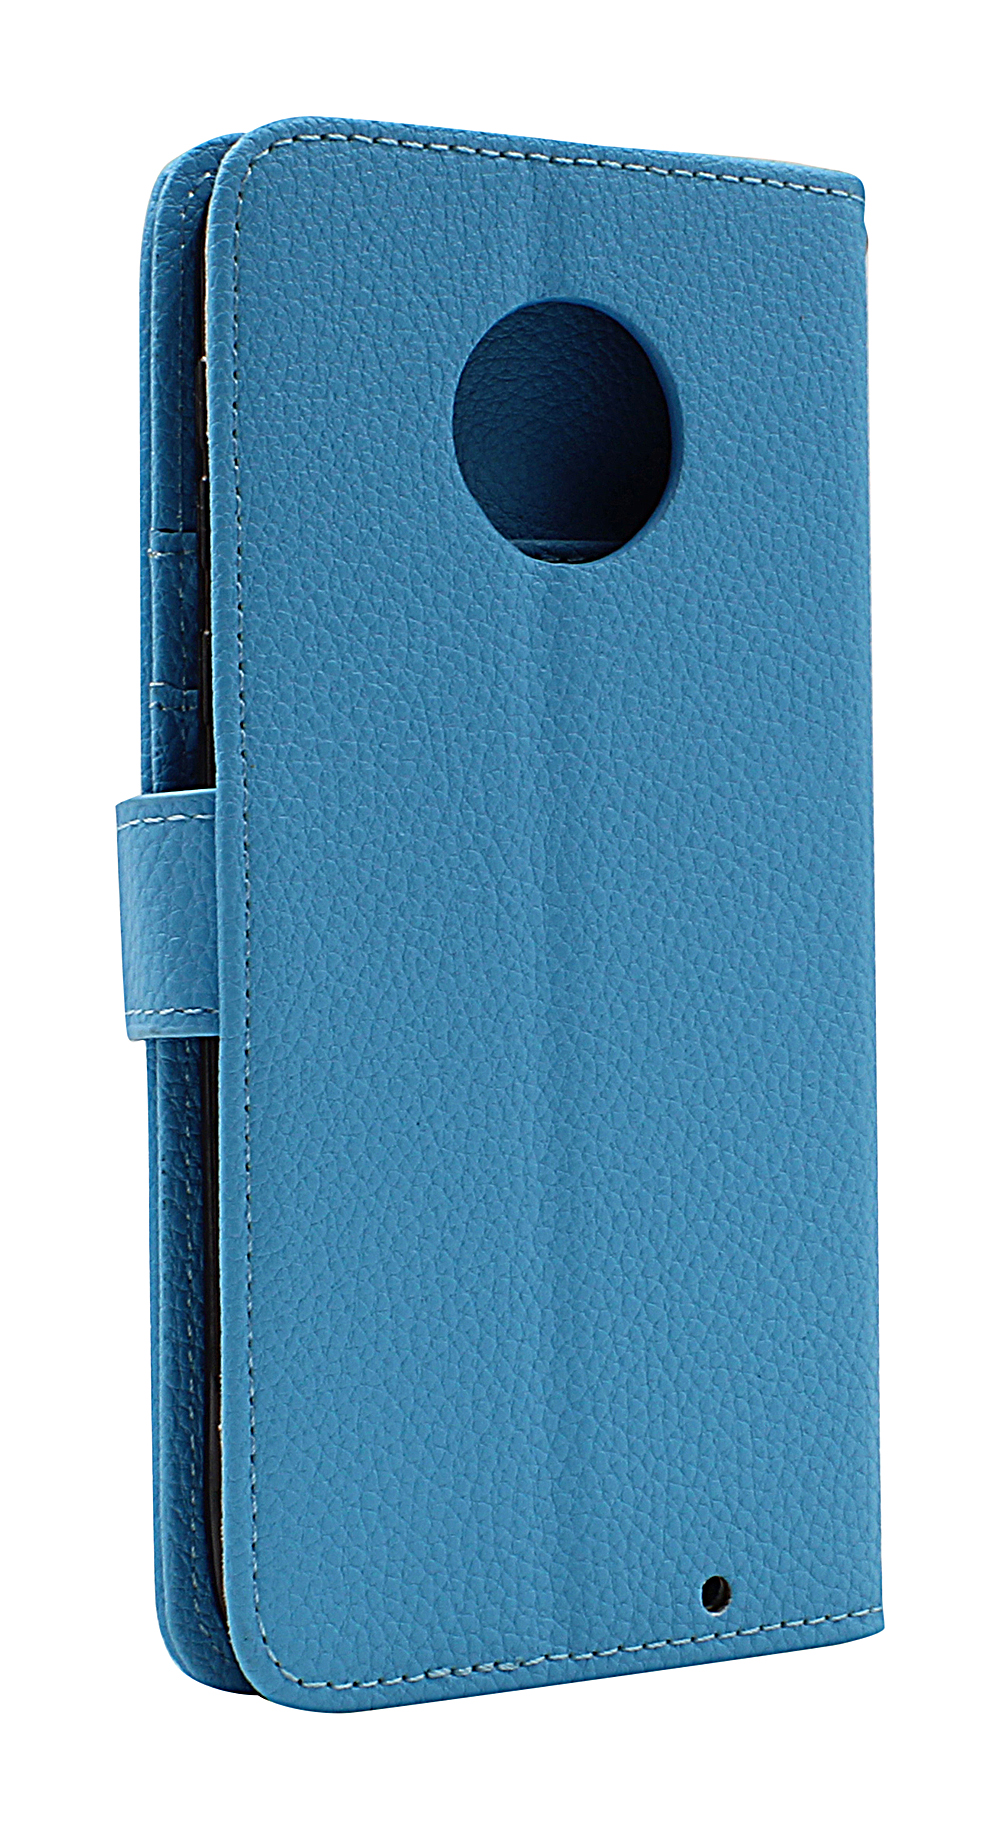 New Standcase Wallet Motorola Moto G6 Plus